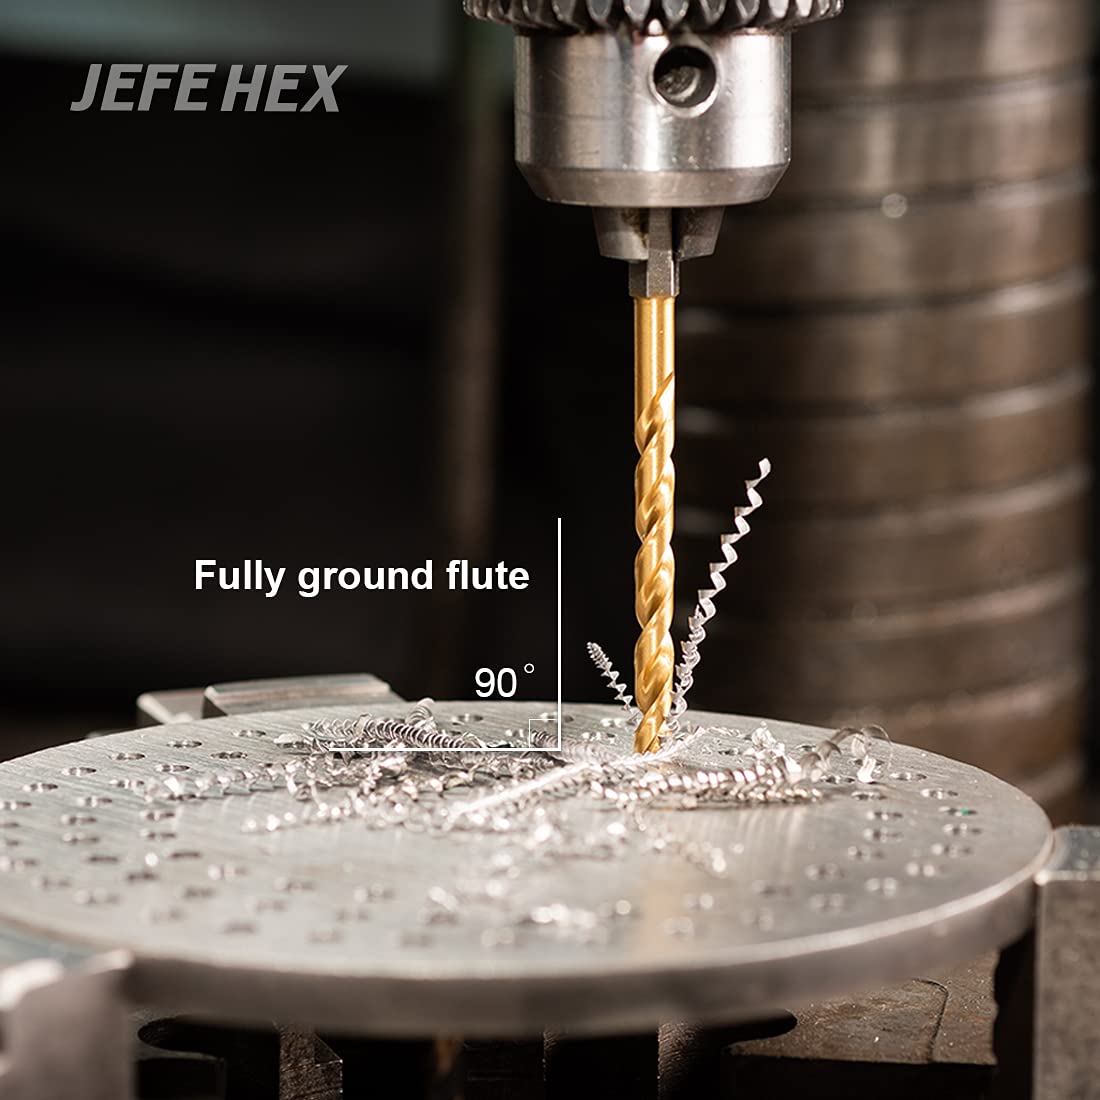 JEFE HEX 1/16" HSS Titanium Hex Shank Drill Bits, 135 Degree Split Point(Pack of 12)